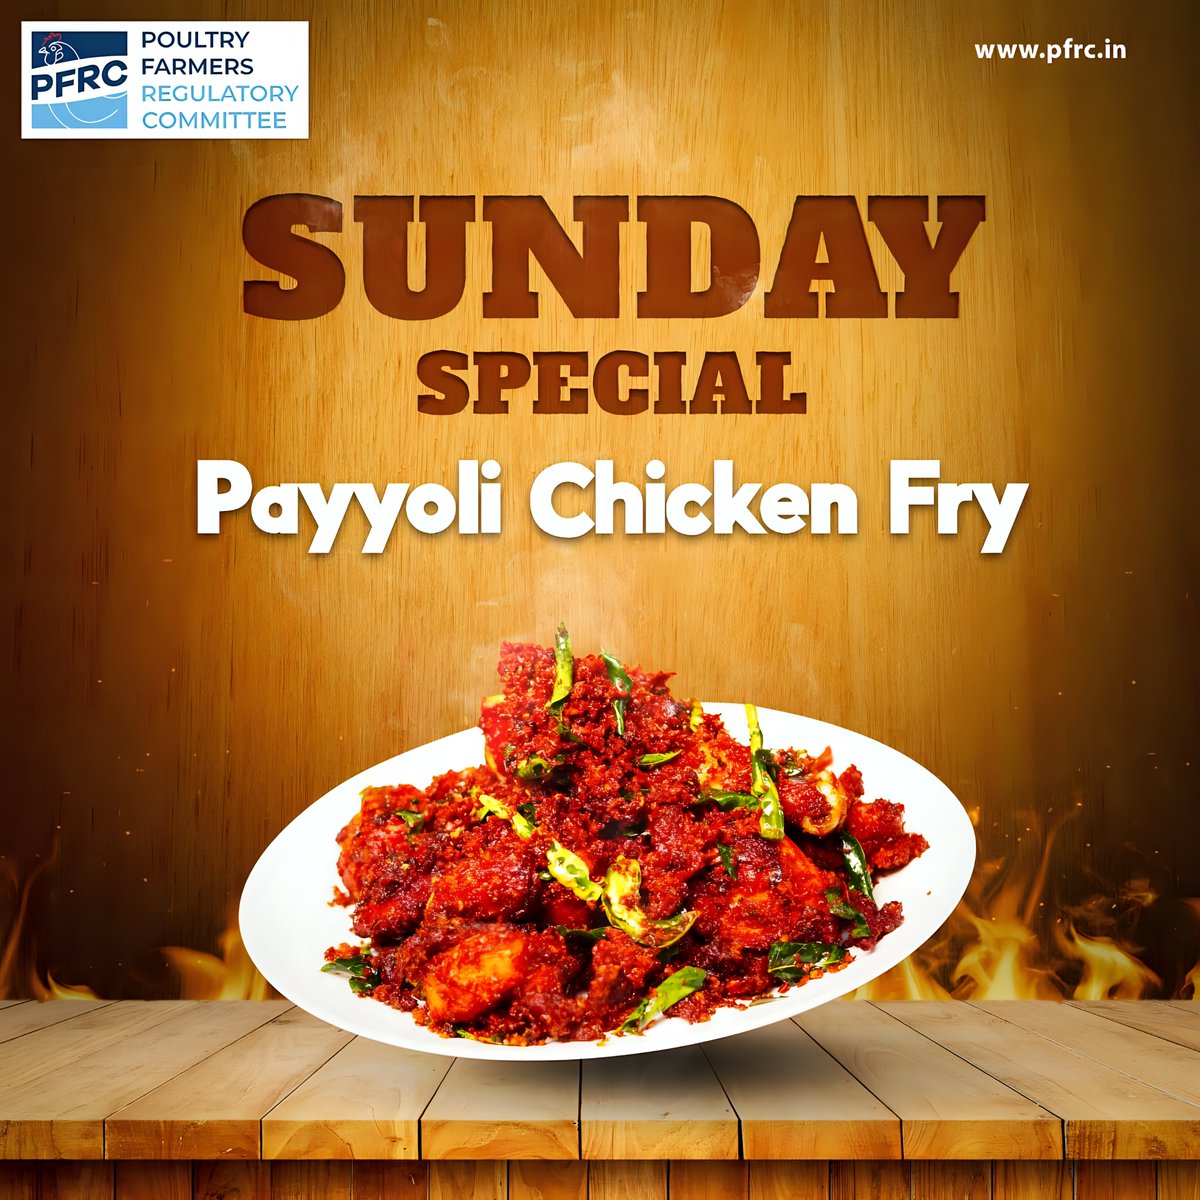 Enjoy this Sunday in a Healthy & Tasty Way with Payyoli Chicken Fry!

Recipe Video 📷📷📷

fb.watch/c819SASyAl/

youtu.be/WV2CCTXc2bM

#PFRC #PFRCTN #Tasty #Farm #Chicken #Sunday #FoodLover #HealthyFood #ChickenRecipe #SundaySpecial #PayyoliChickenFry